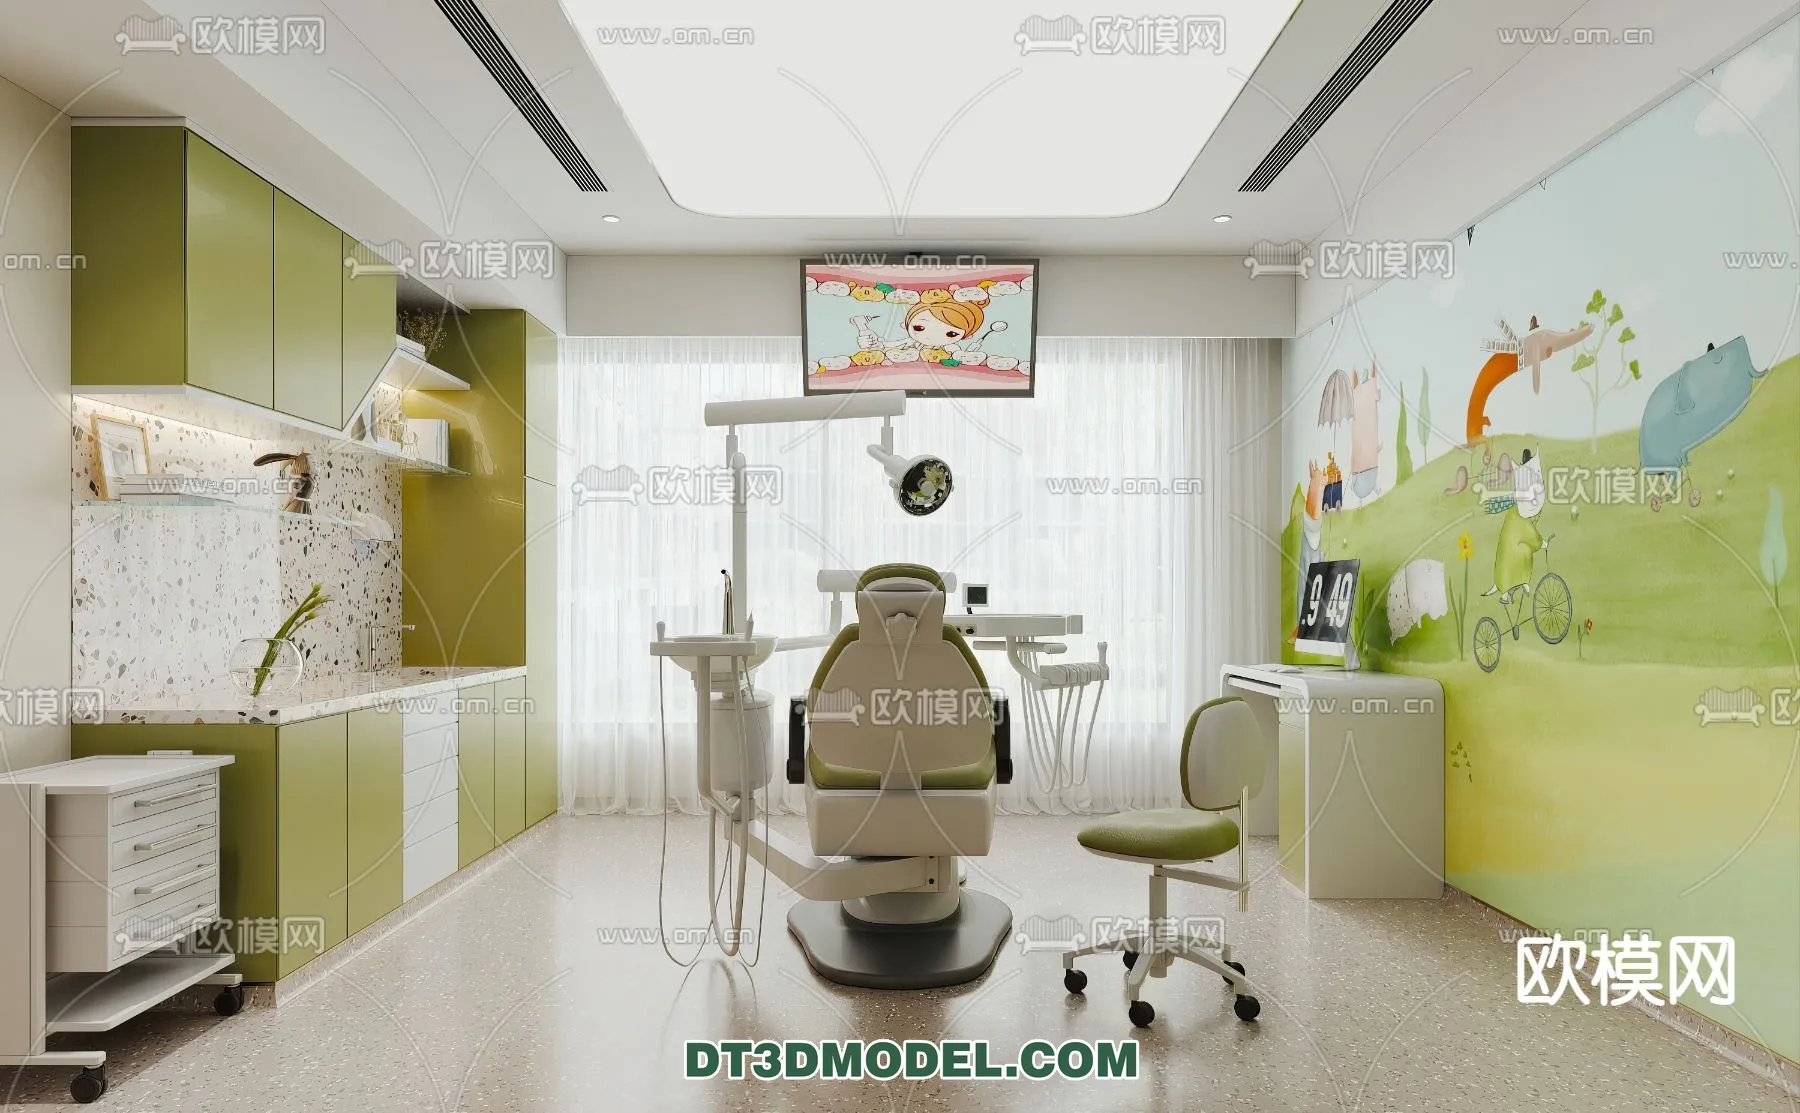 HOSPITAL 3D SCENES – MODERN – 0118